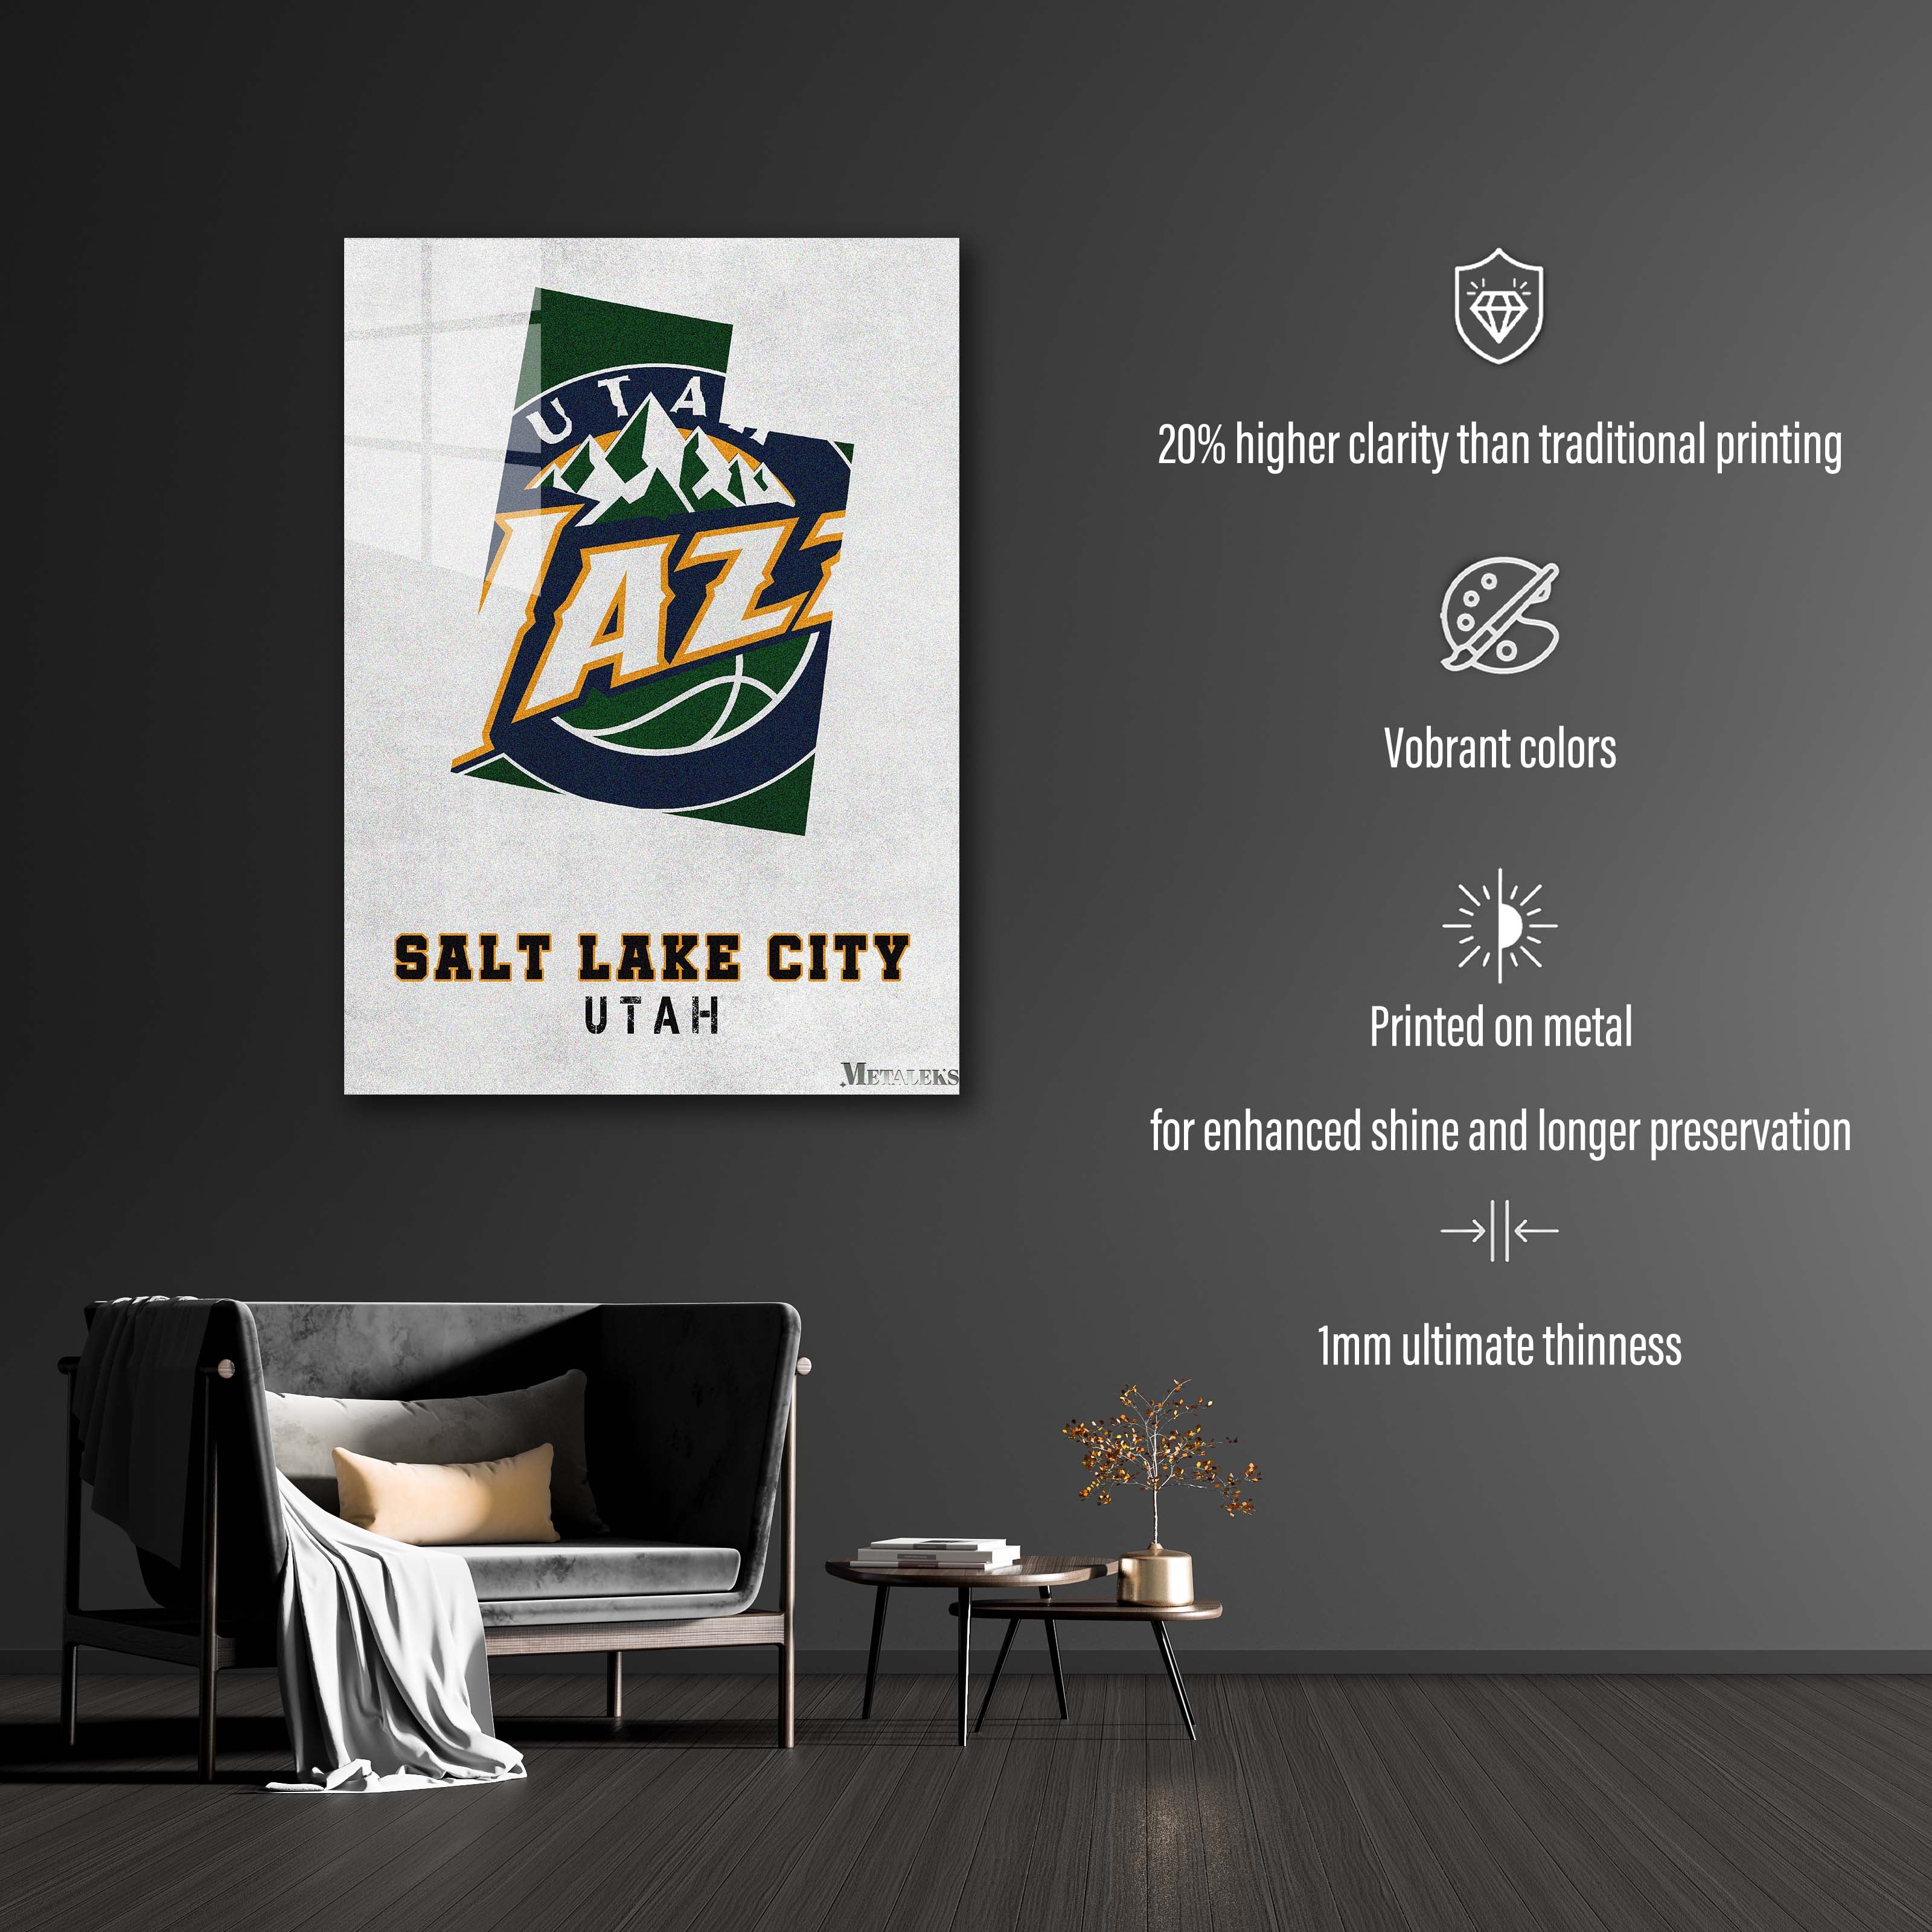 Utah Jazz-designed by @Hoang Van Thuan